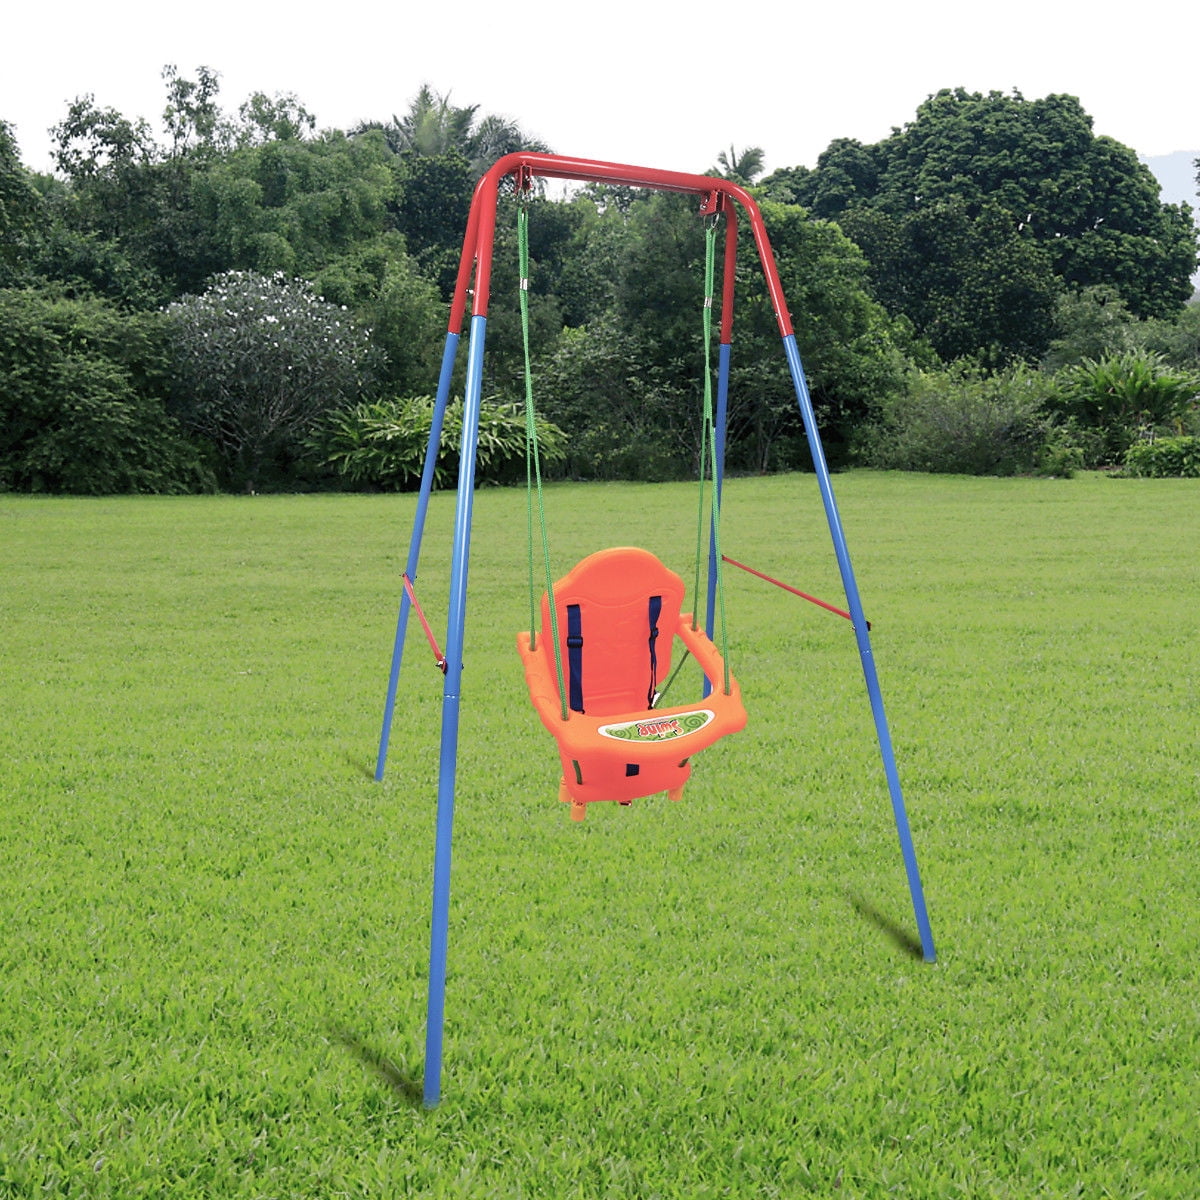 Livebest High Back Swing Playset Toddler Adjustable Seat Tree Backyard Toy Belt 